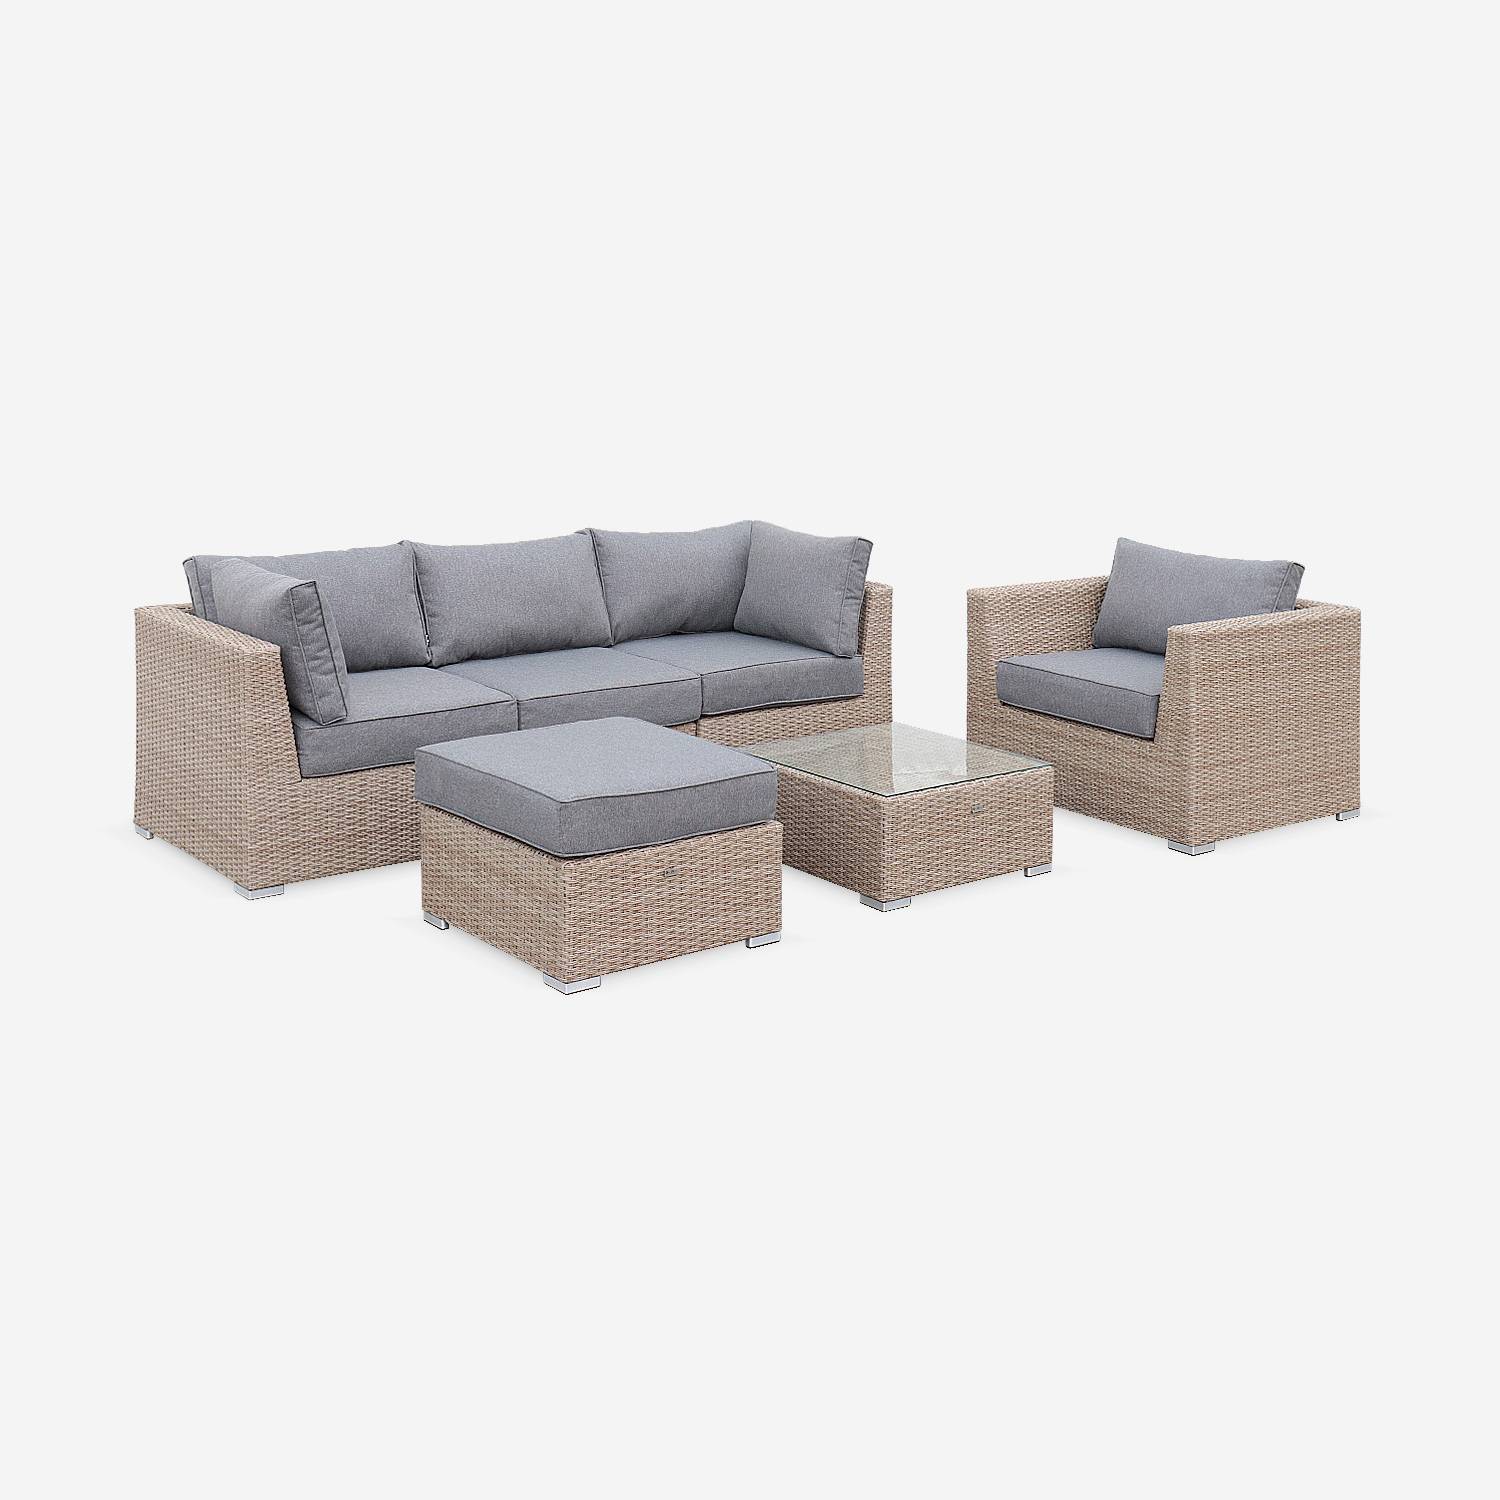 Hochwertige Gartenmöbel aus abgerundetem Polyrattan XXL -VINCI- Farbe Natur/Kissen dunkelgrau 5 Sitzplätze | sweeek